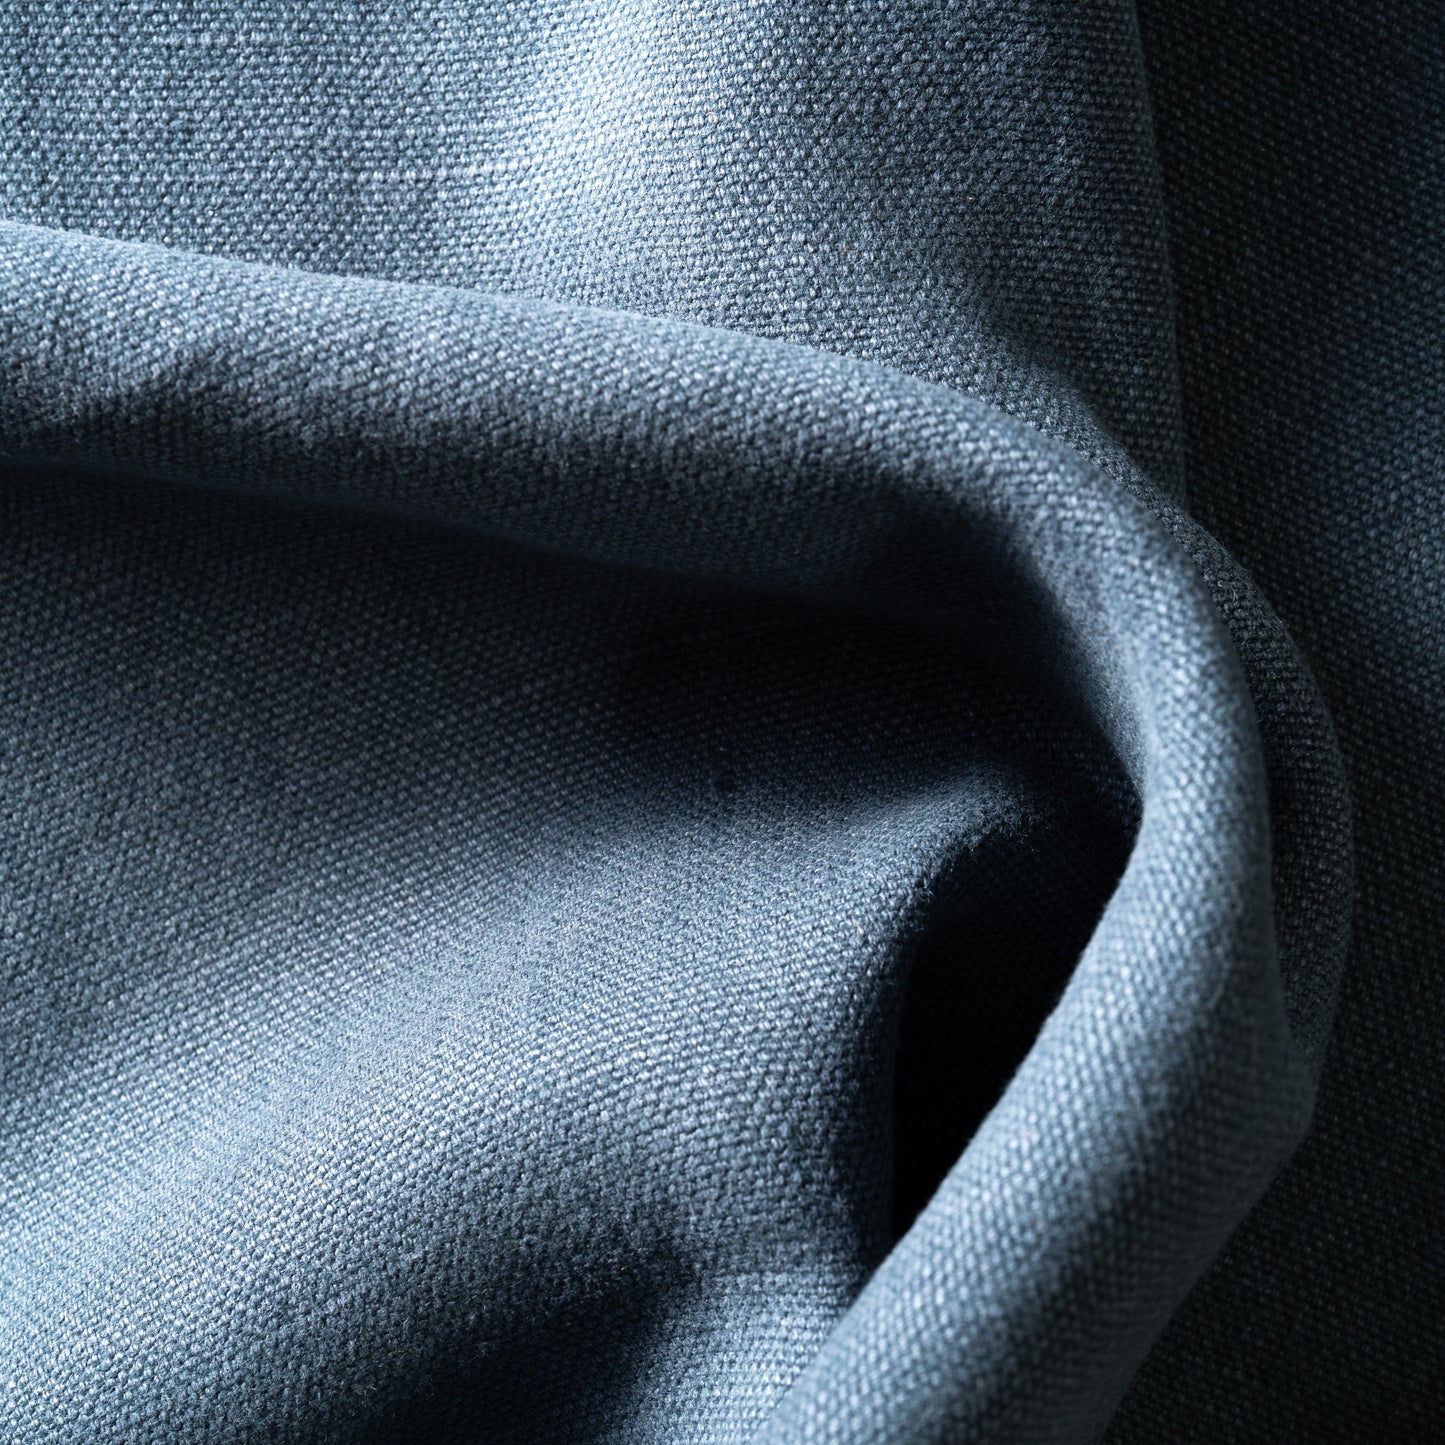 14.3 oz/sq yard 100% Upholstery/ Slipcover Weight Linen in Bondi Blue Swatch